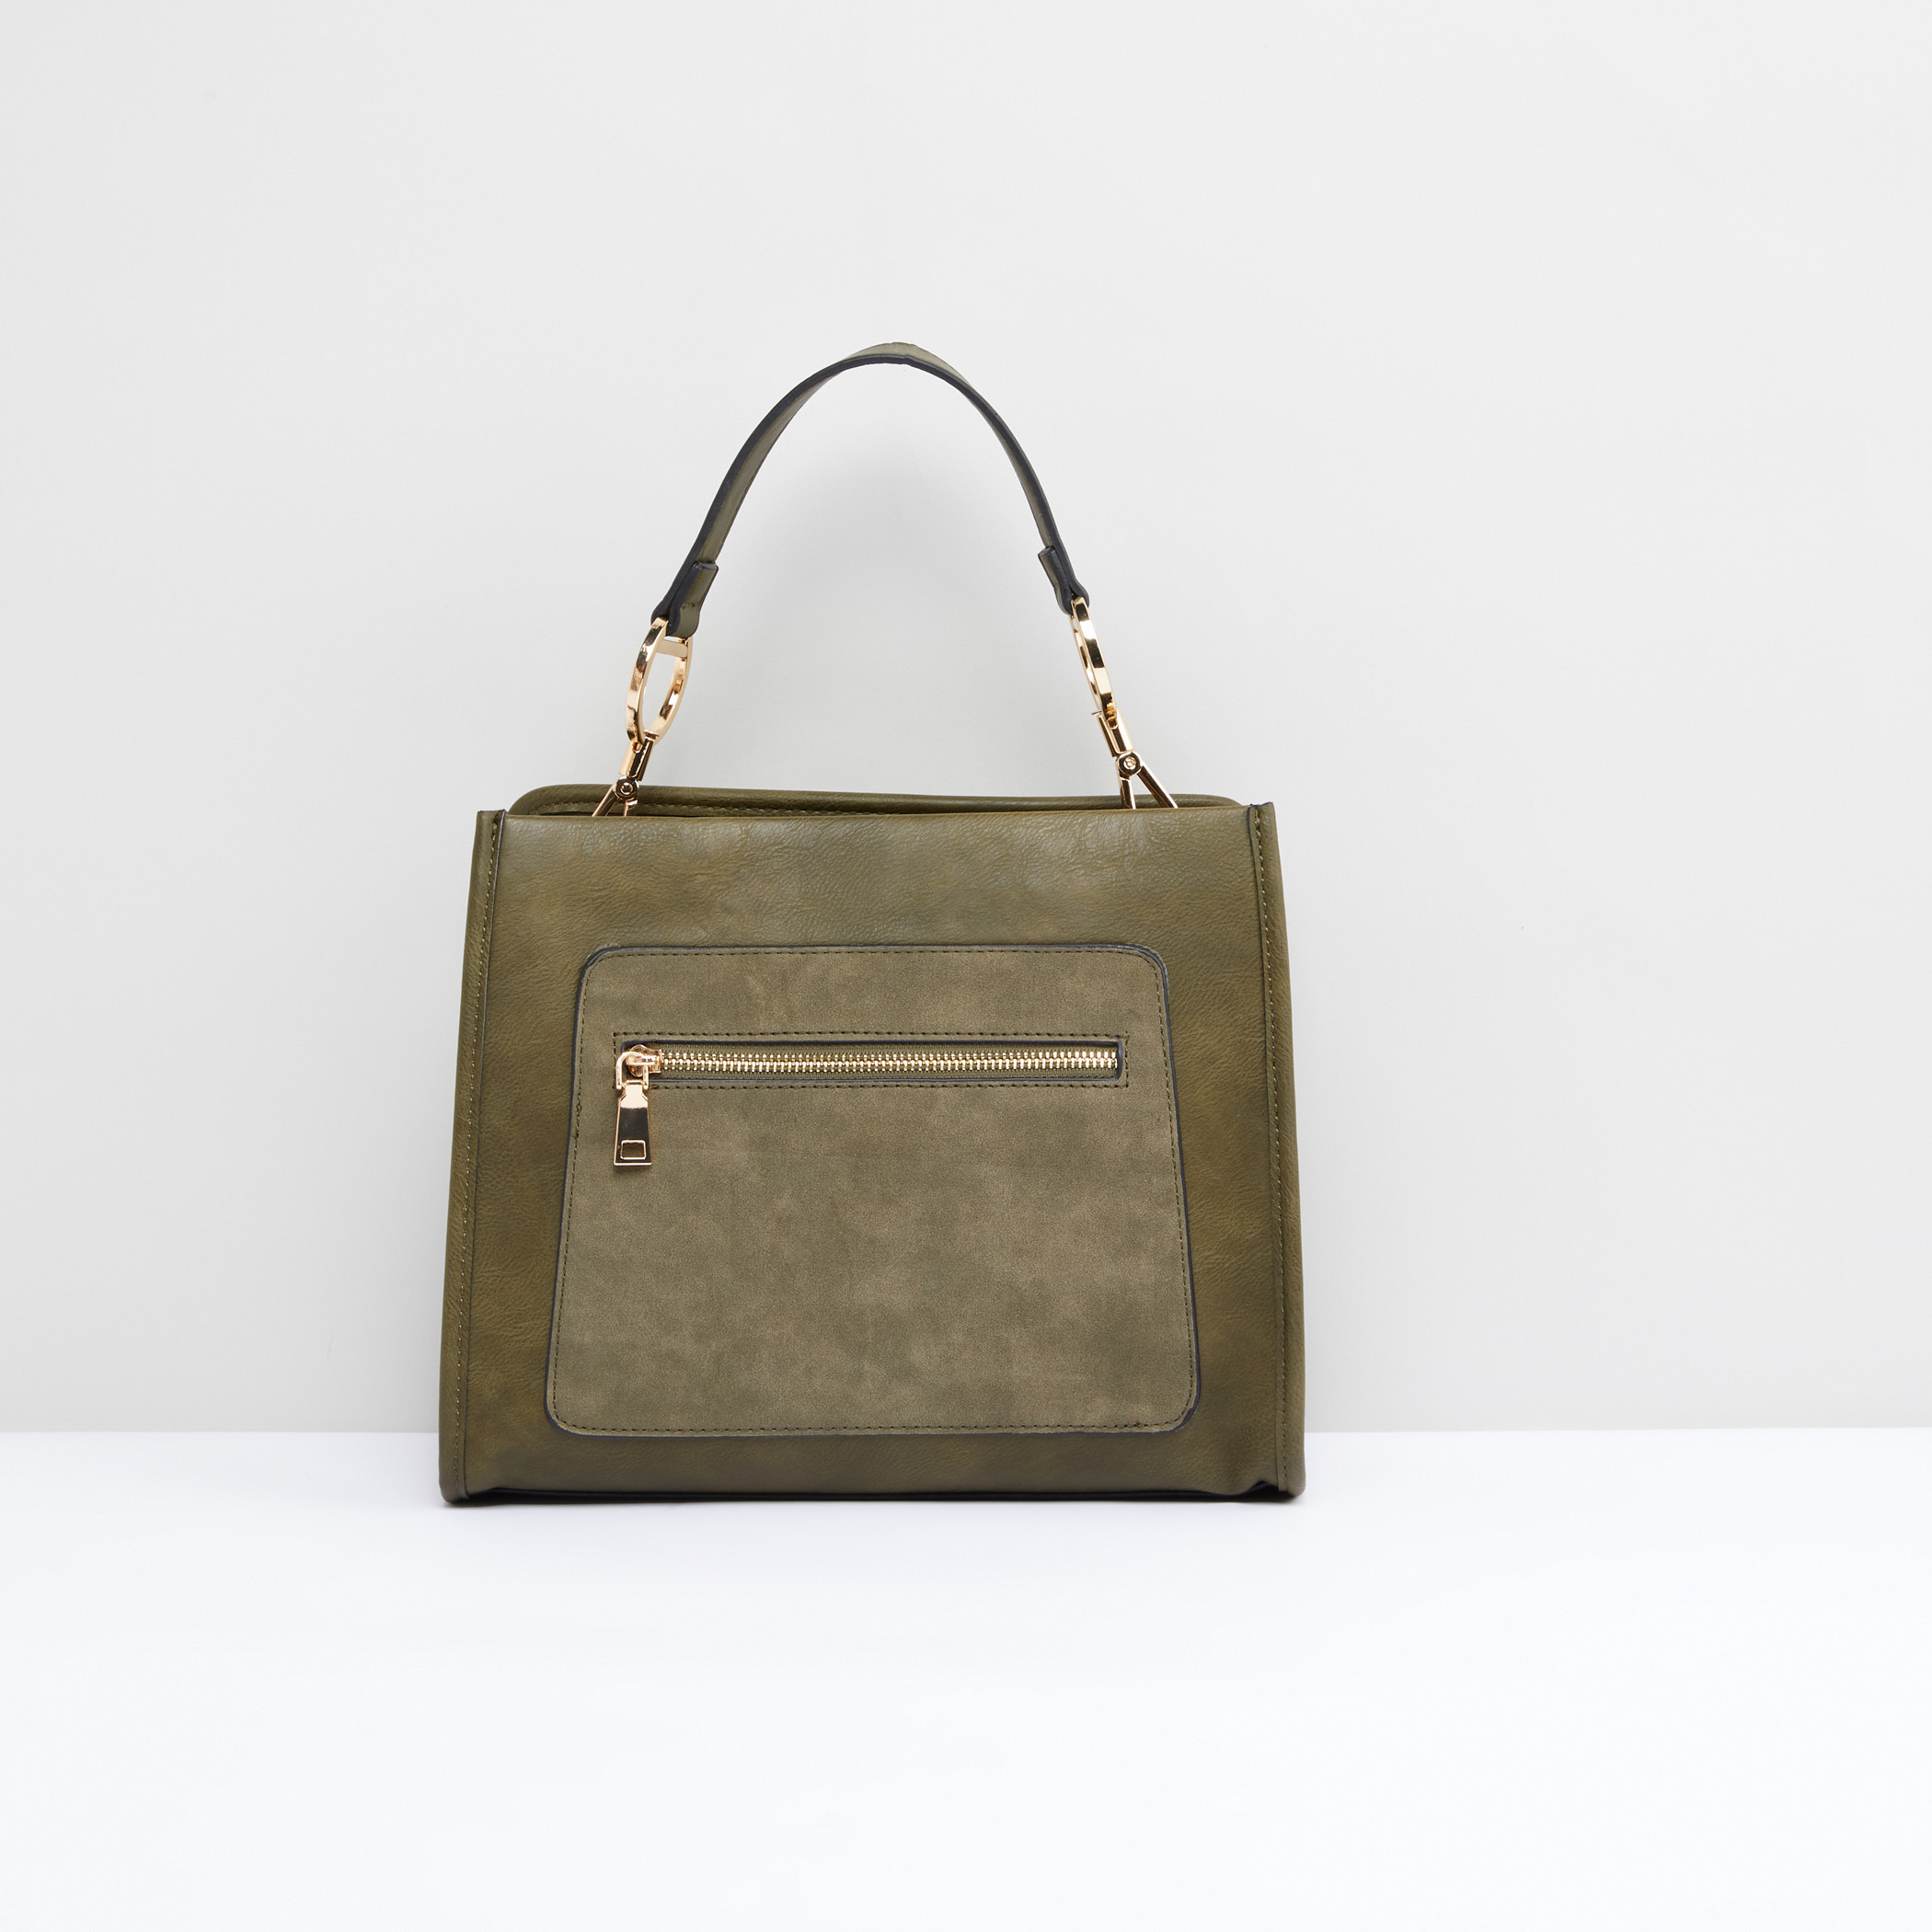 Shop Plain Shoulder Bag with Strap Handle and Lock Clasp Closure Online |  Max Oman